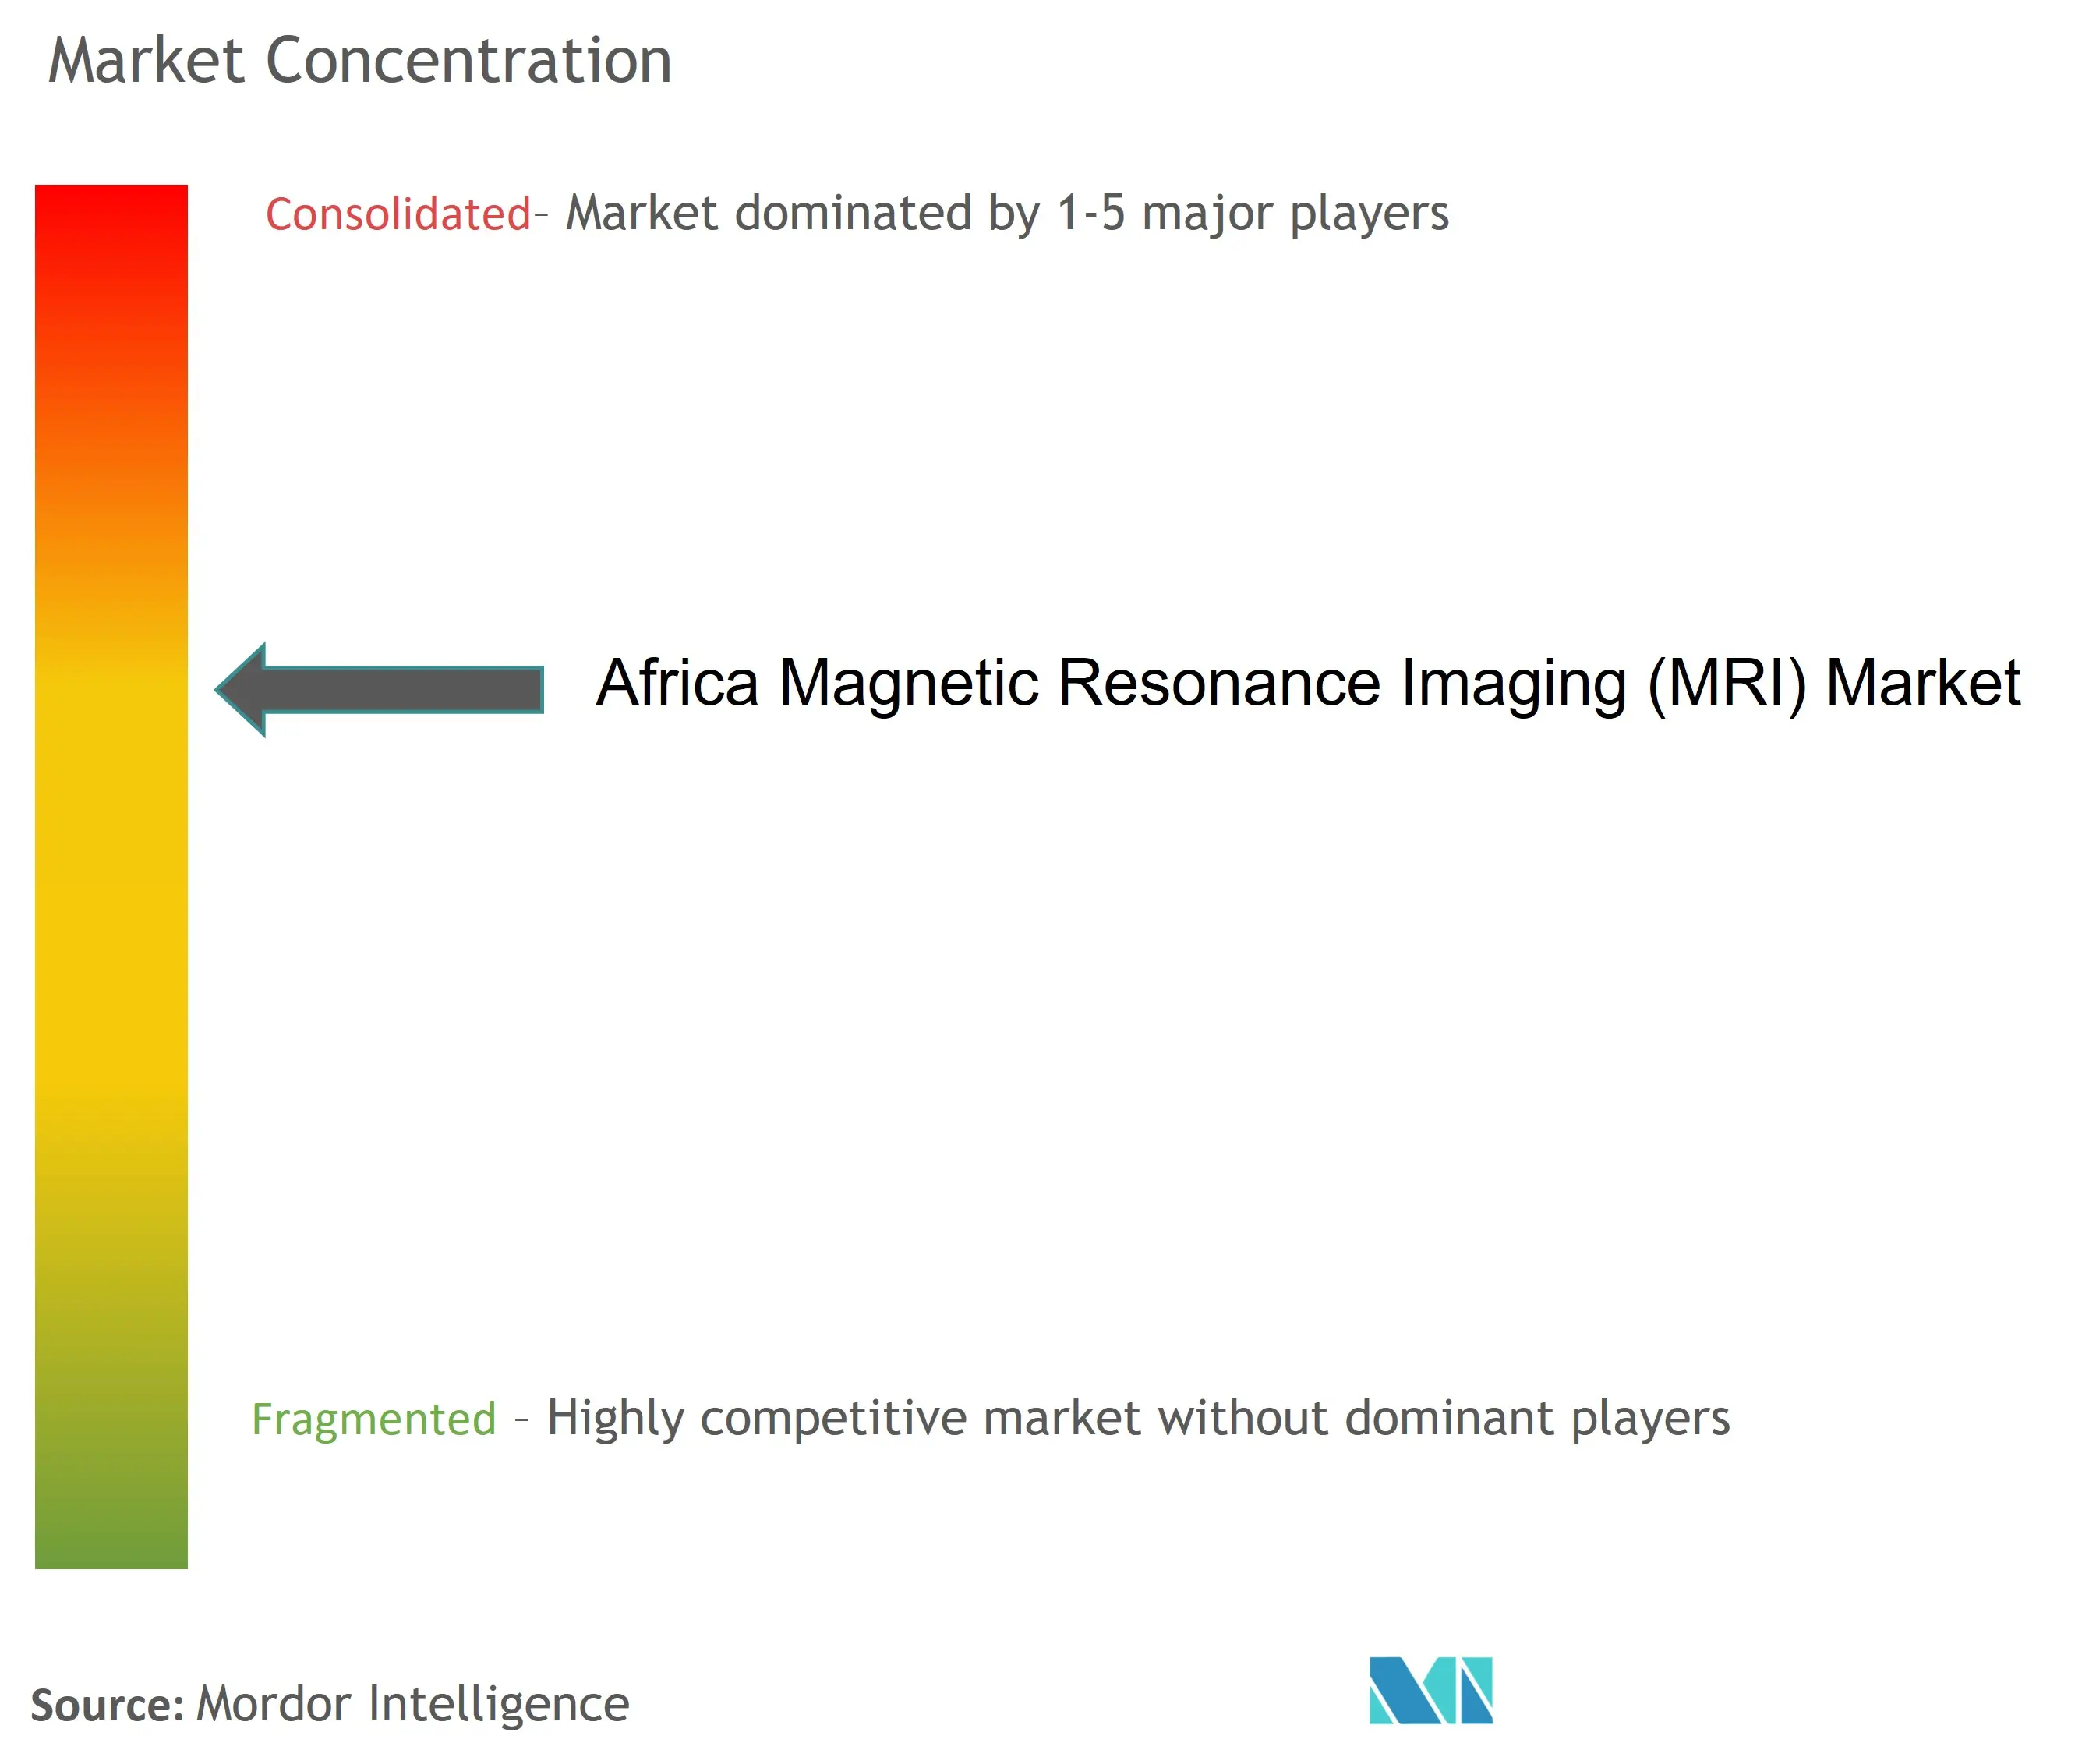 Africa Magnetic Resonance Imaging (MRI) Market Concentration